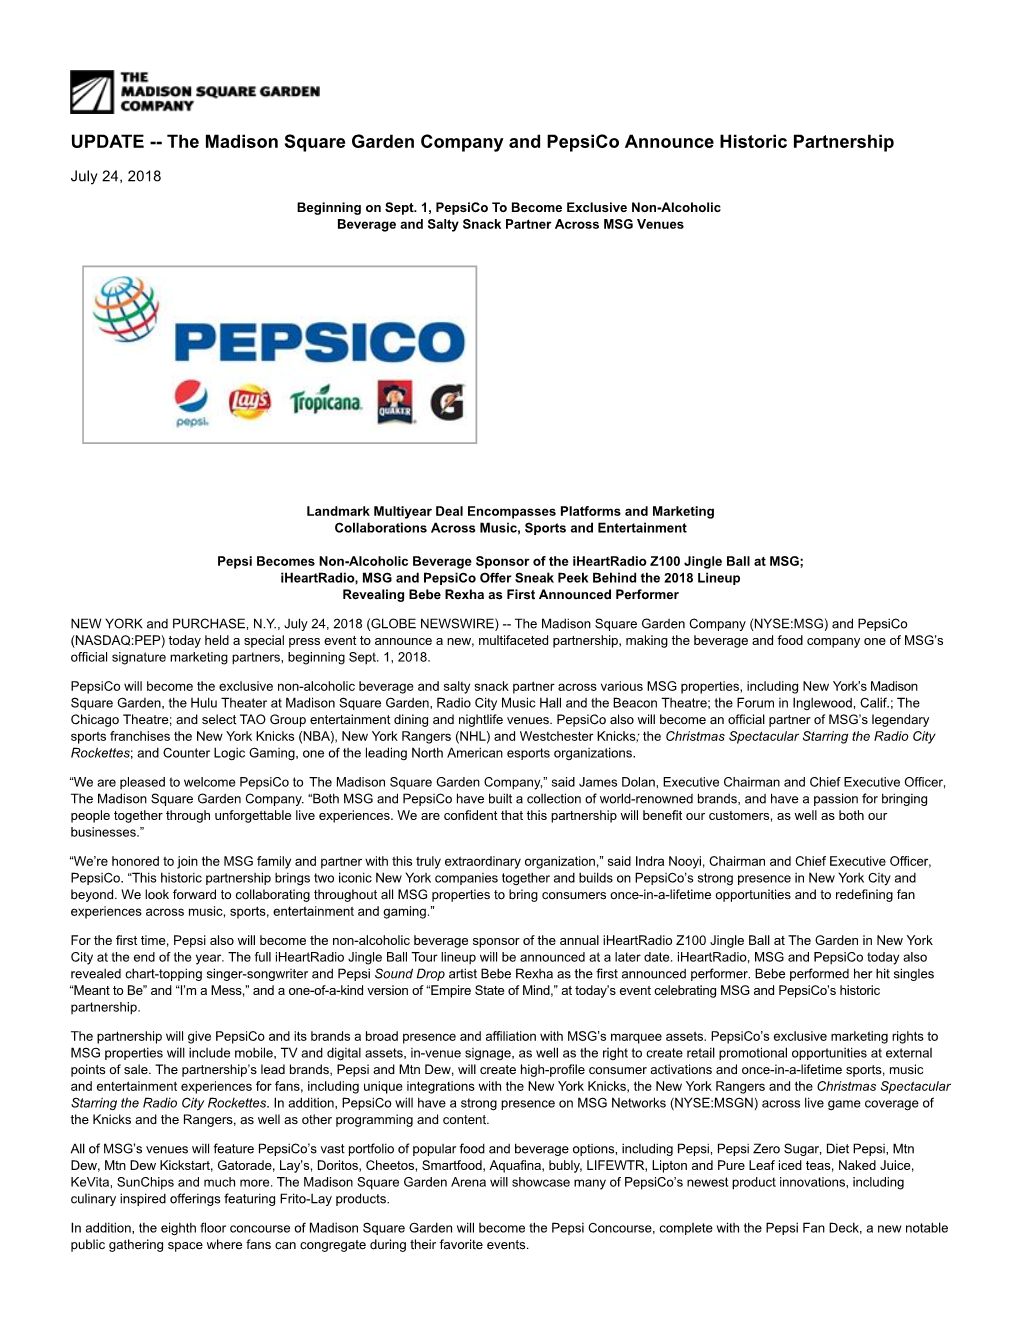 The Madison Square Garden Company and Pepsico Announce Historic Partnership